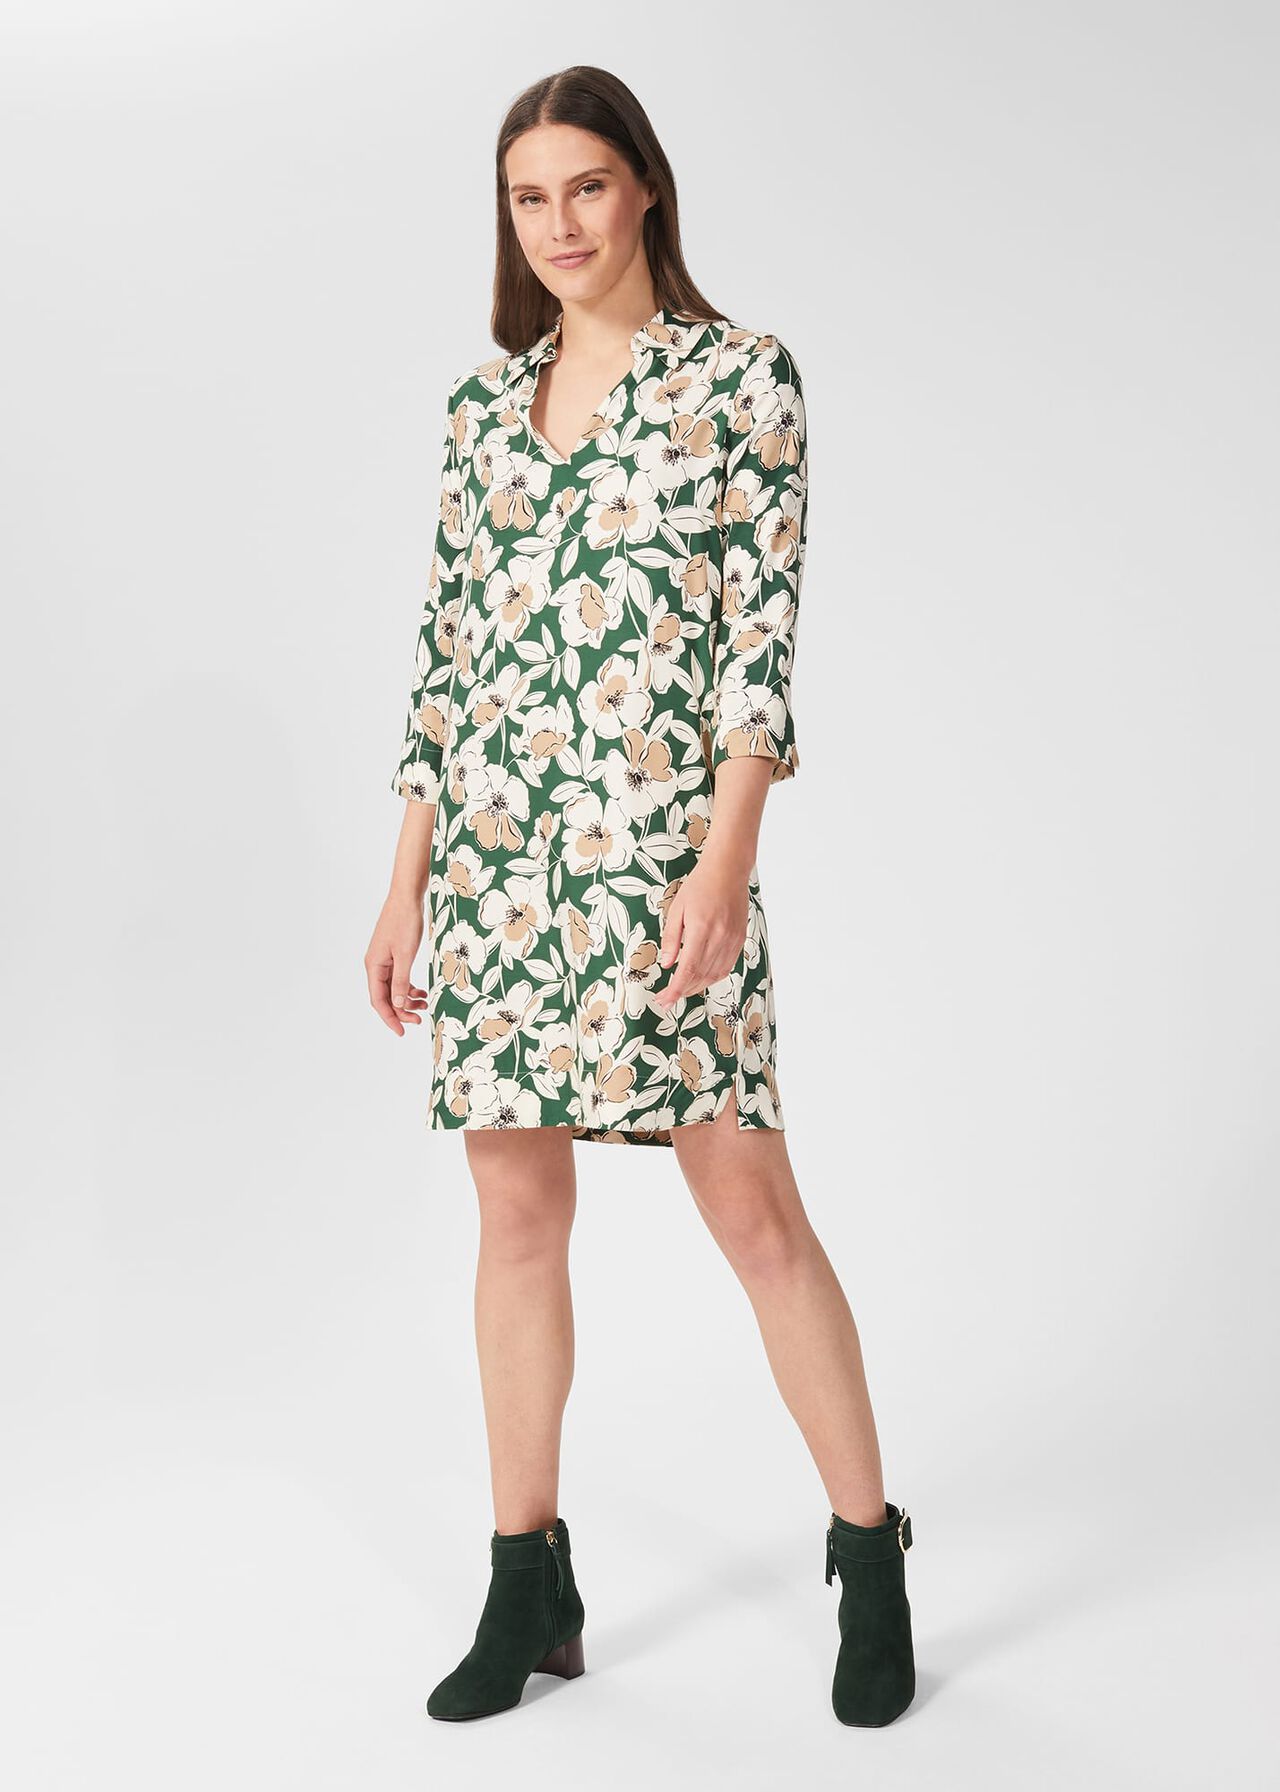 Marea Floral Tunic Dress, Green Multi, hi-res